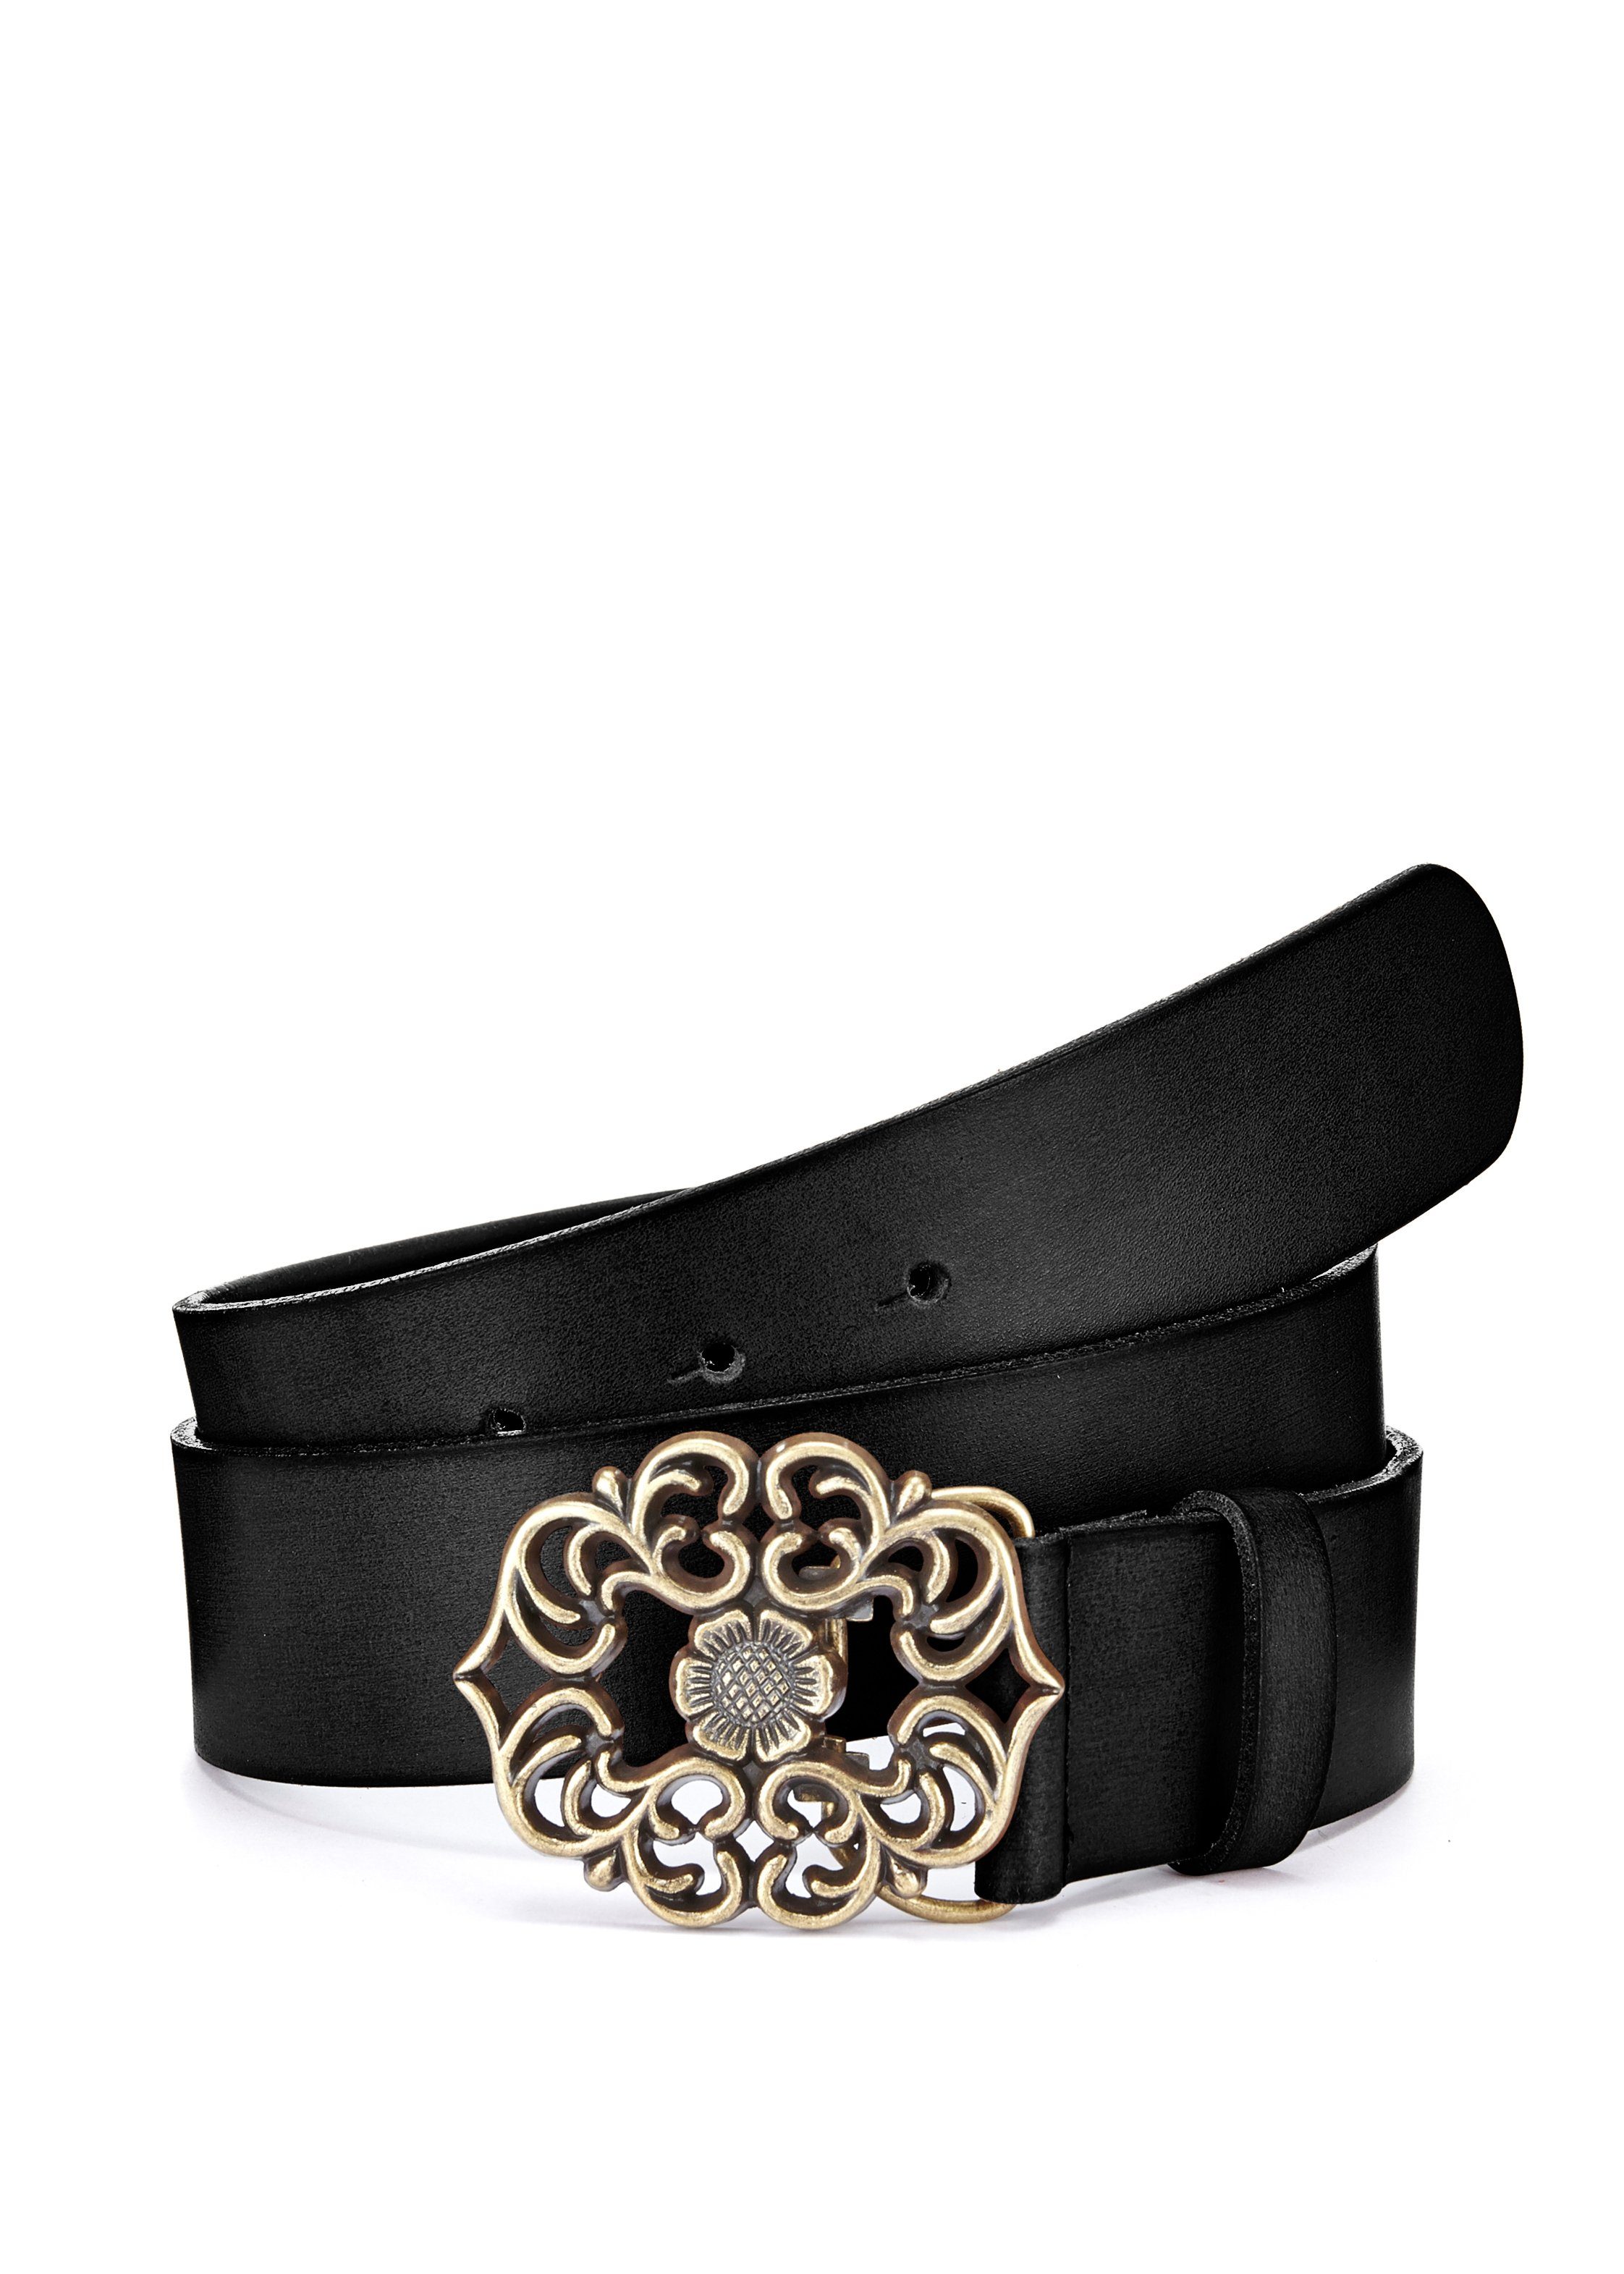 LASCANA Ledergürtel Hüftgürtel mit Metallschließe, Leder-Hüftgürtel, für Hosen, Jeans & Kleider schwarz-goldfarben